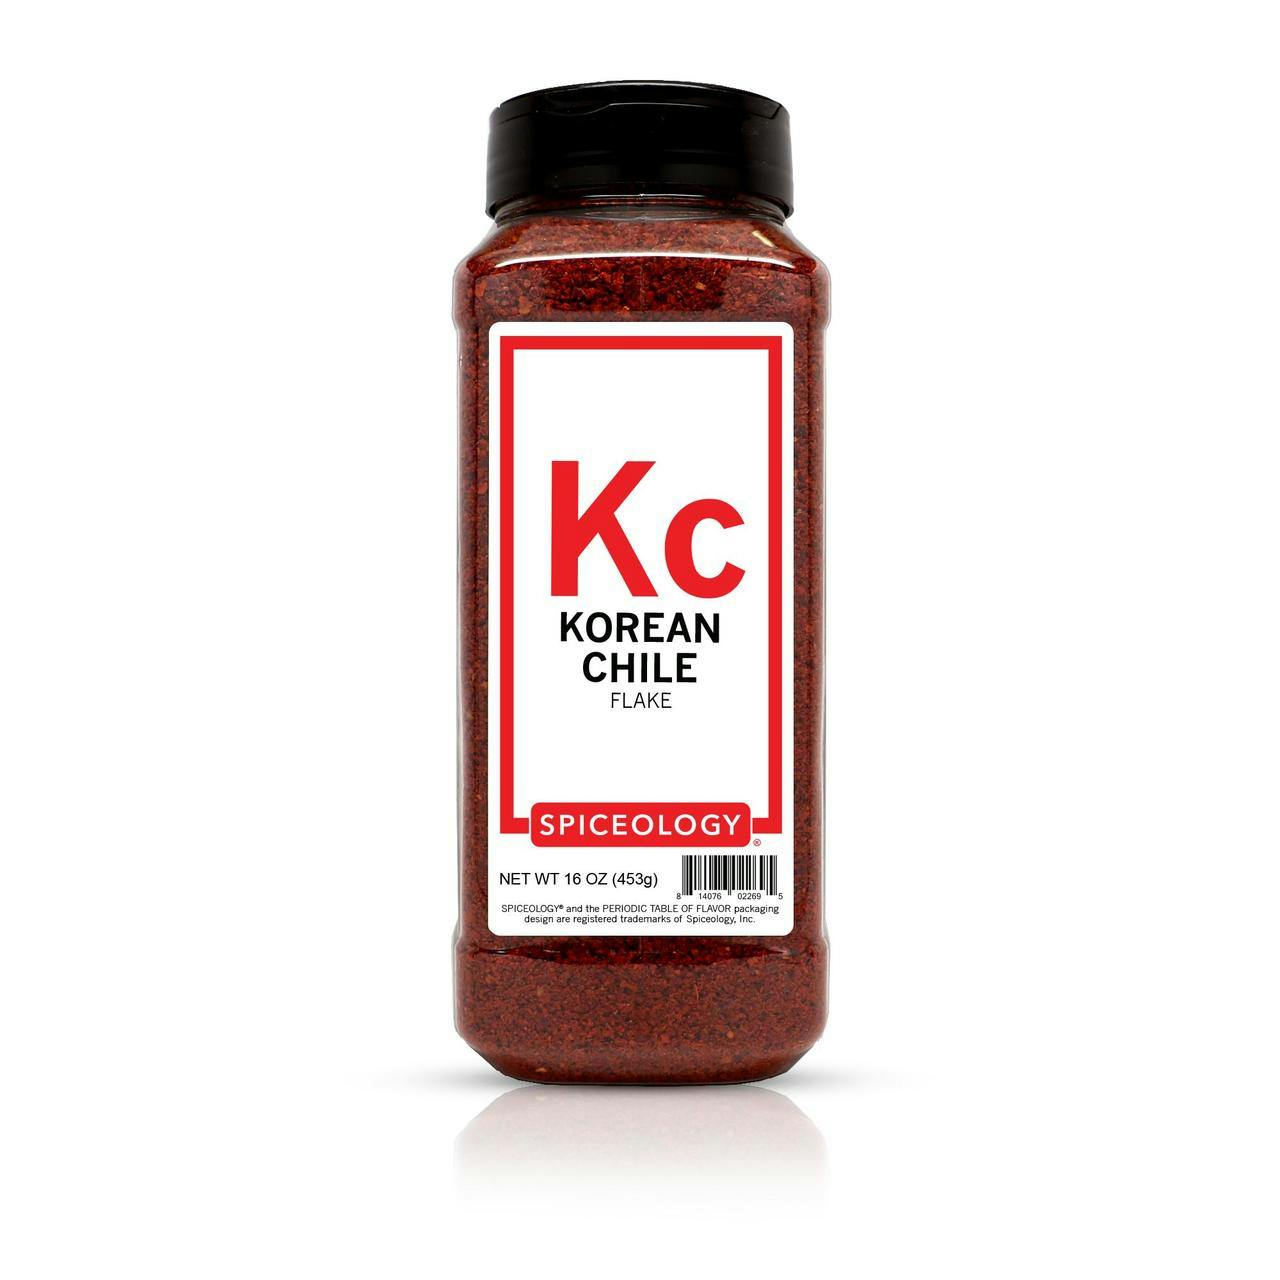 Spiceology Korean Chili Flake